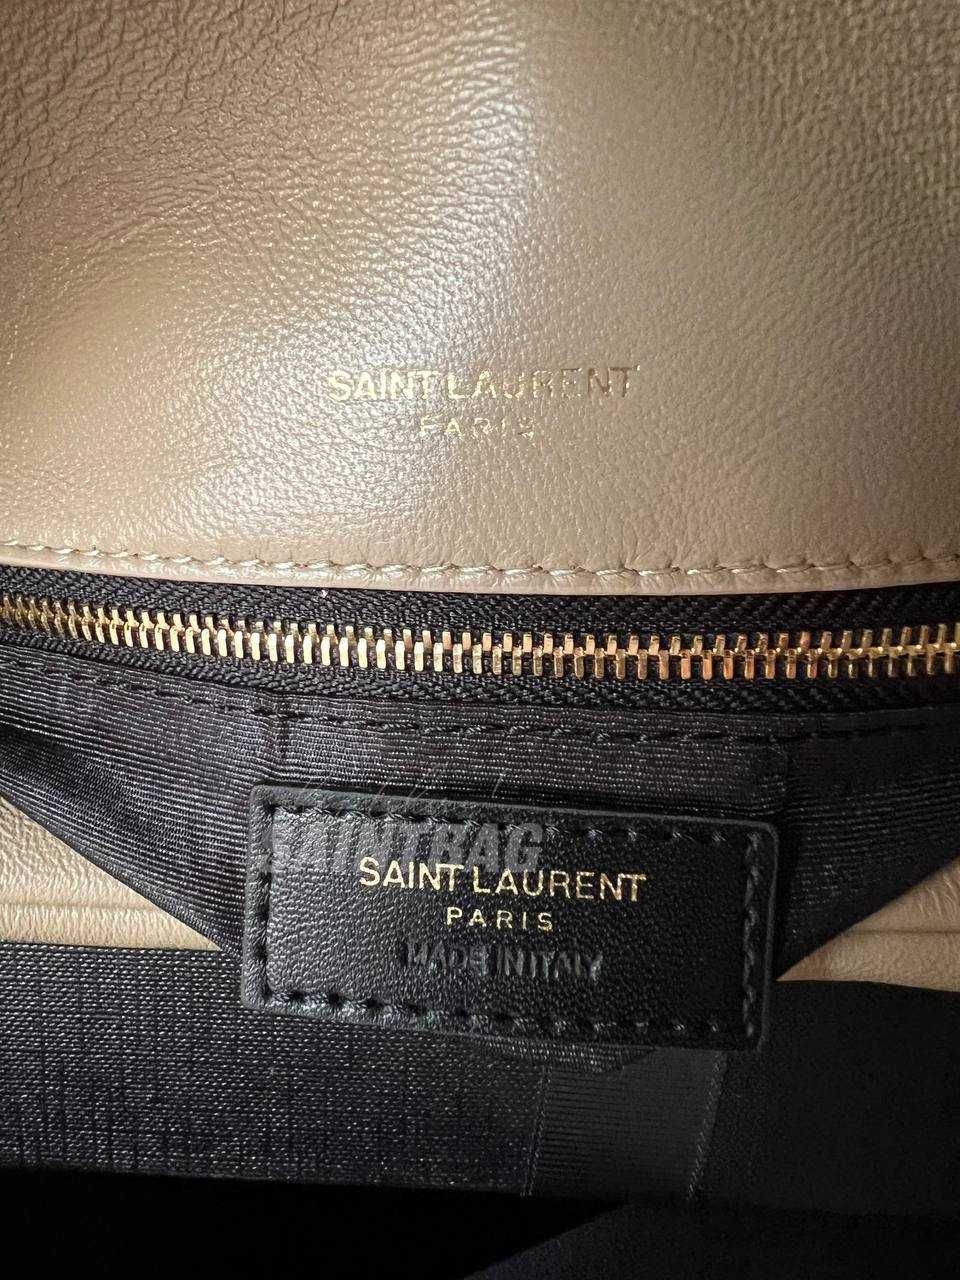 Под заказ сумка Puffer Saint Laurent Сен Лоран пуффер натуральная кожа